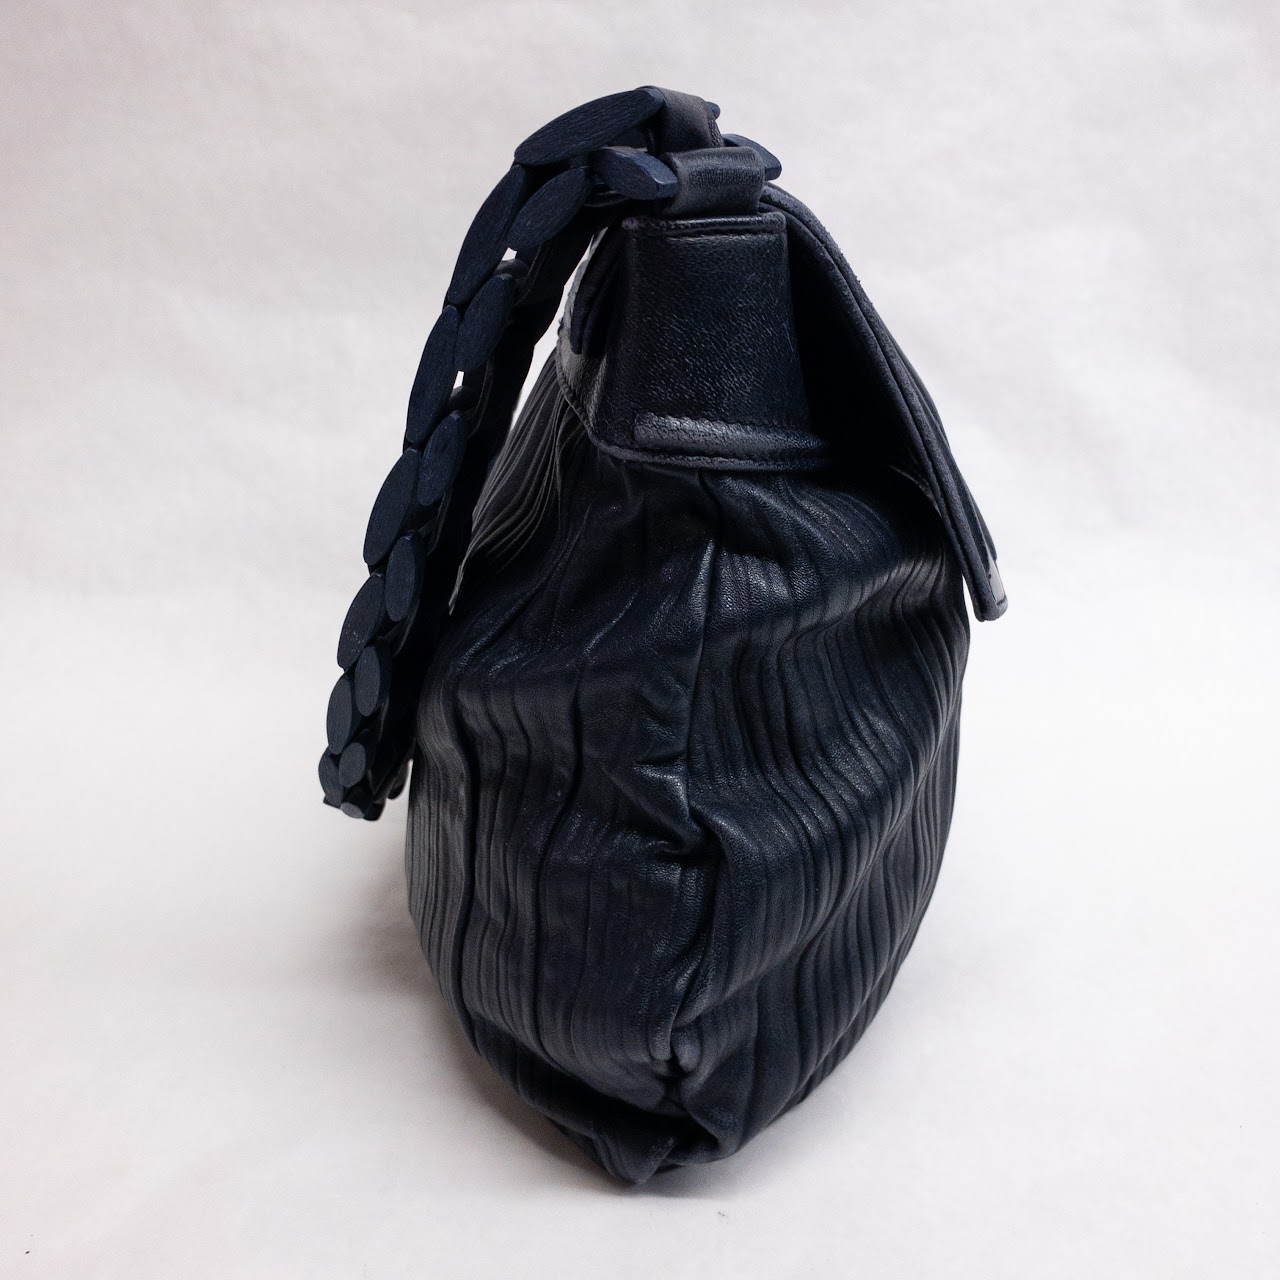 Zac Posen Navy Blue Shoulder Bag